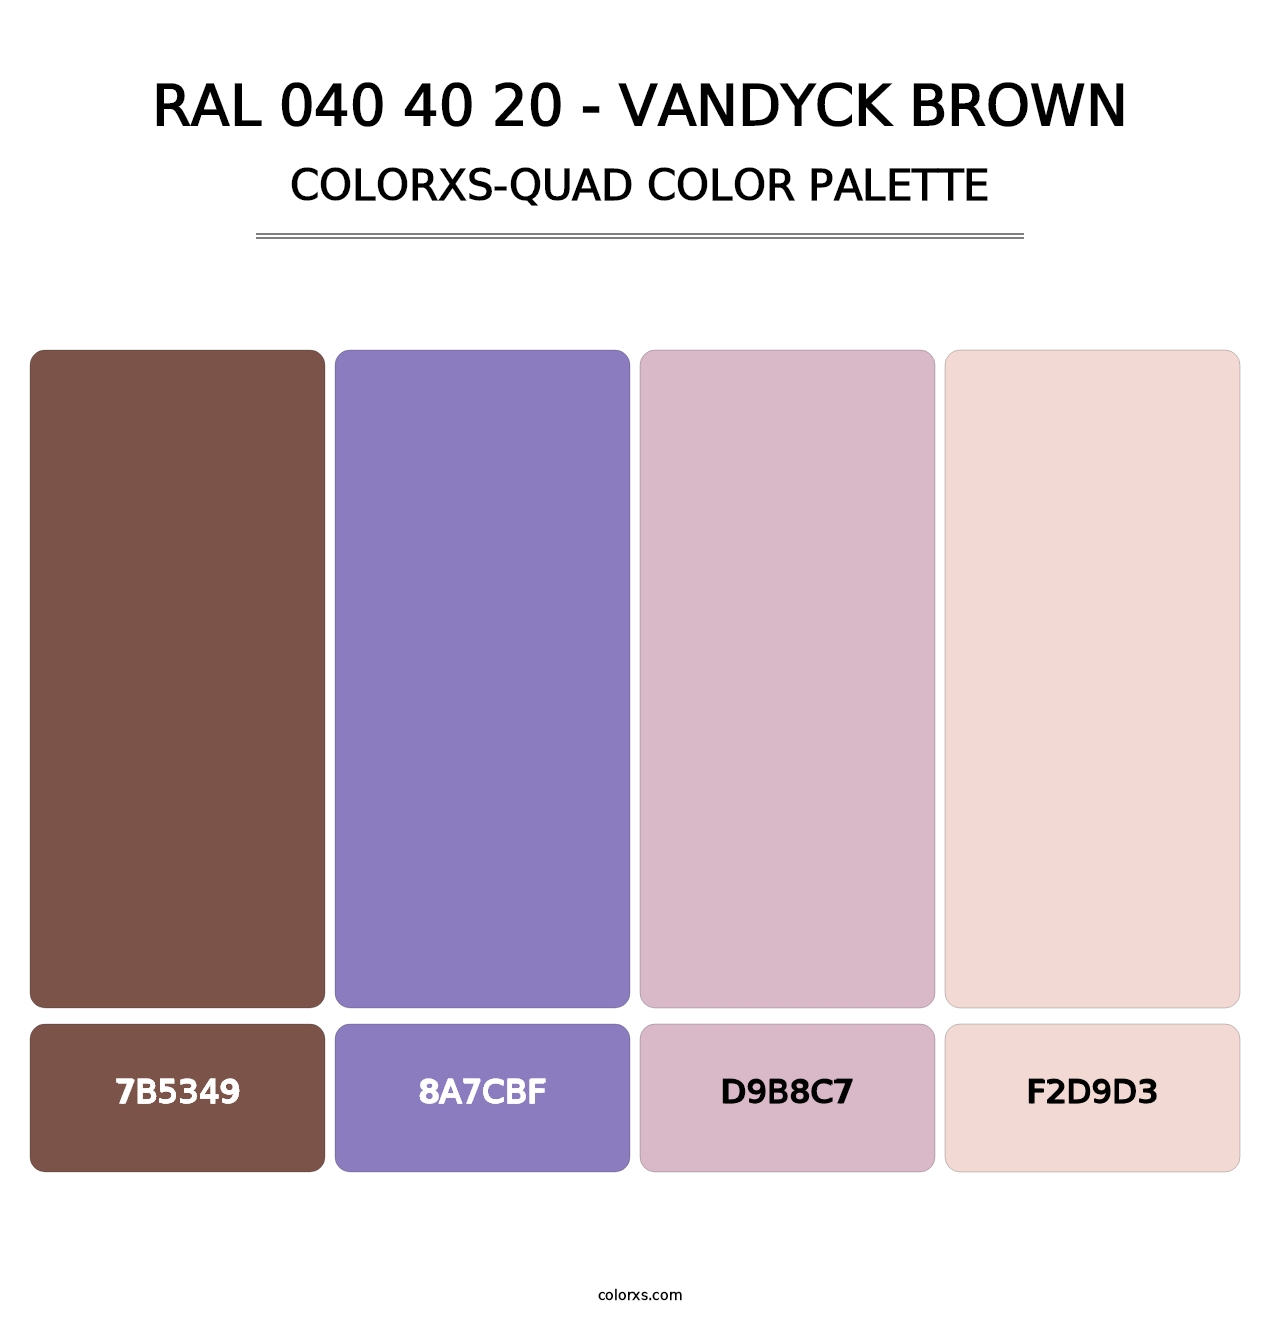 RAL 040 40 20 - Vandyck Brown - Colorxs Quad Palette